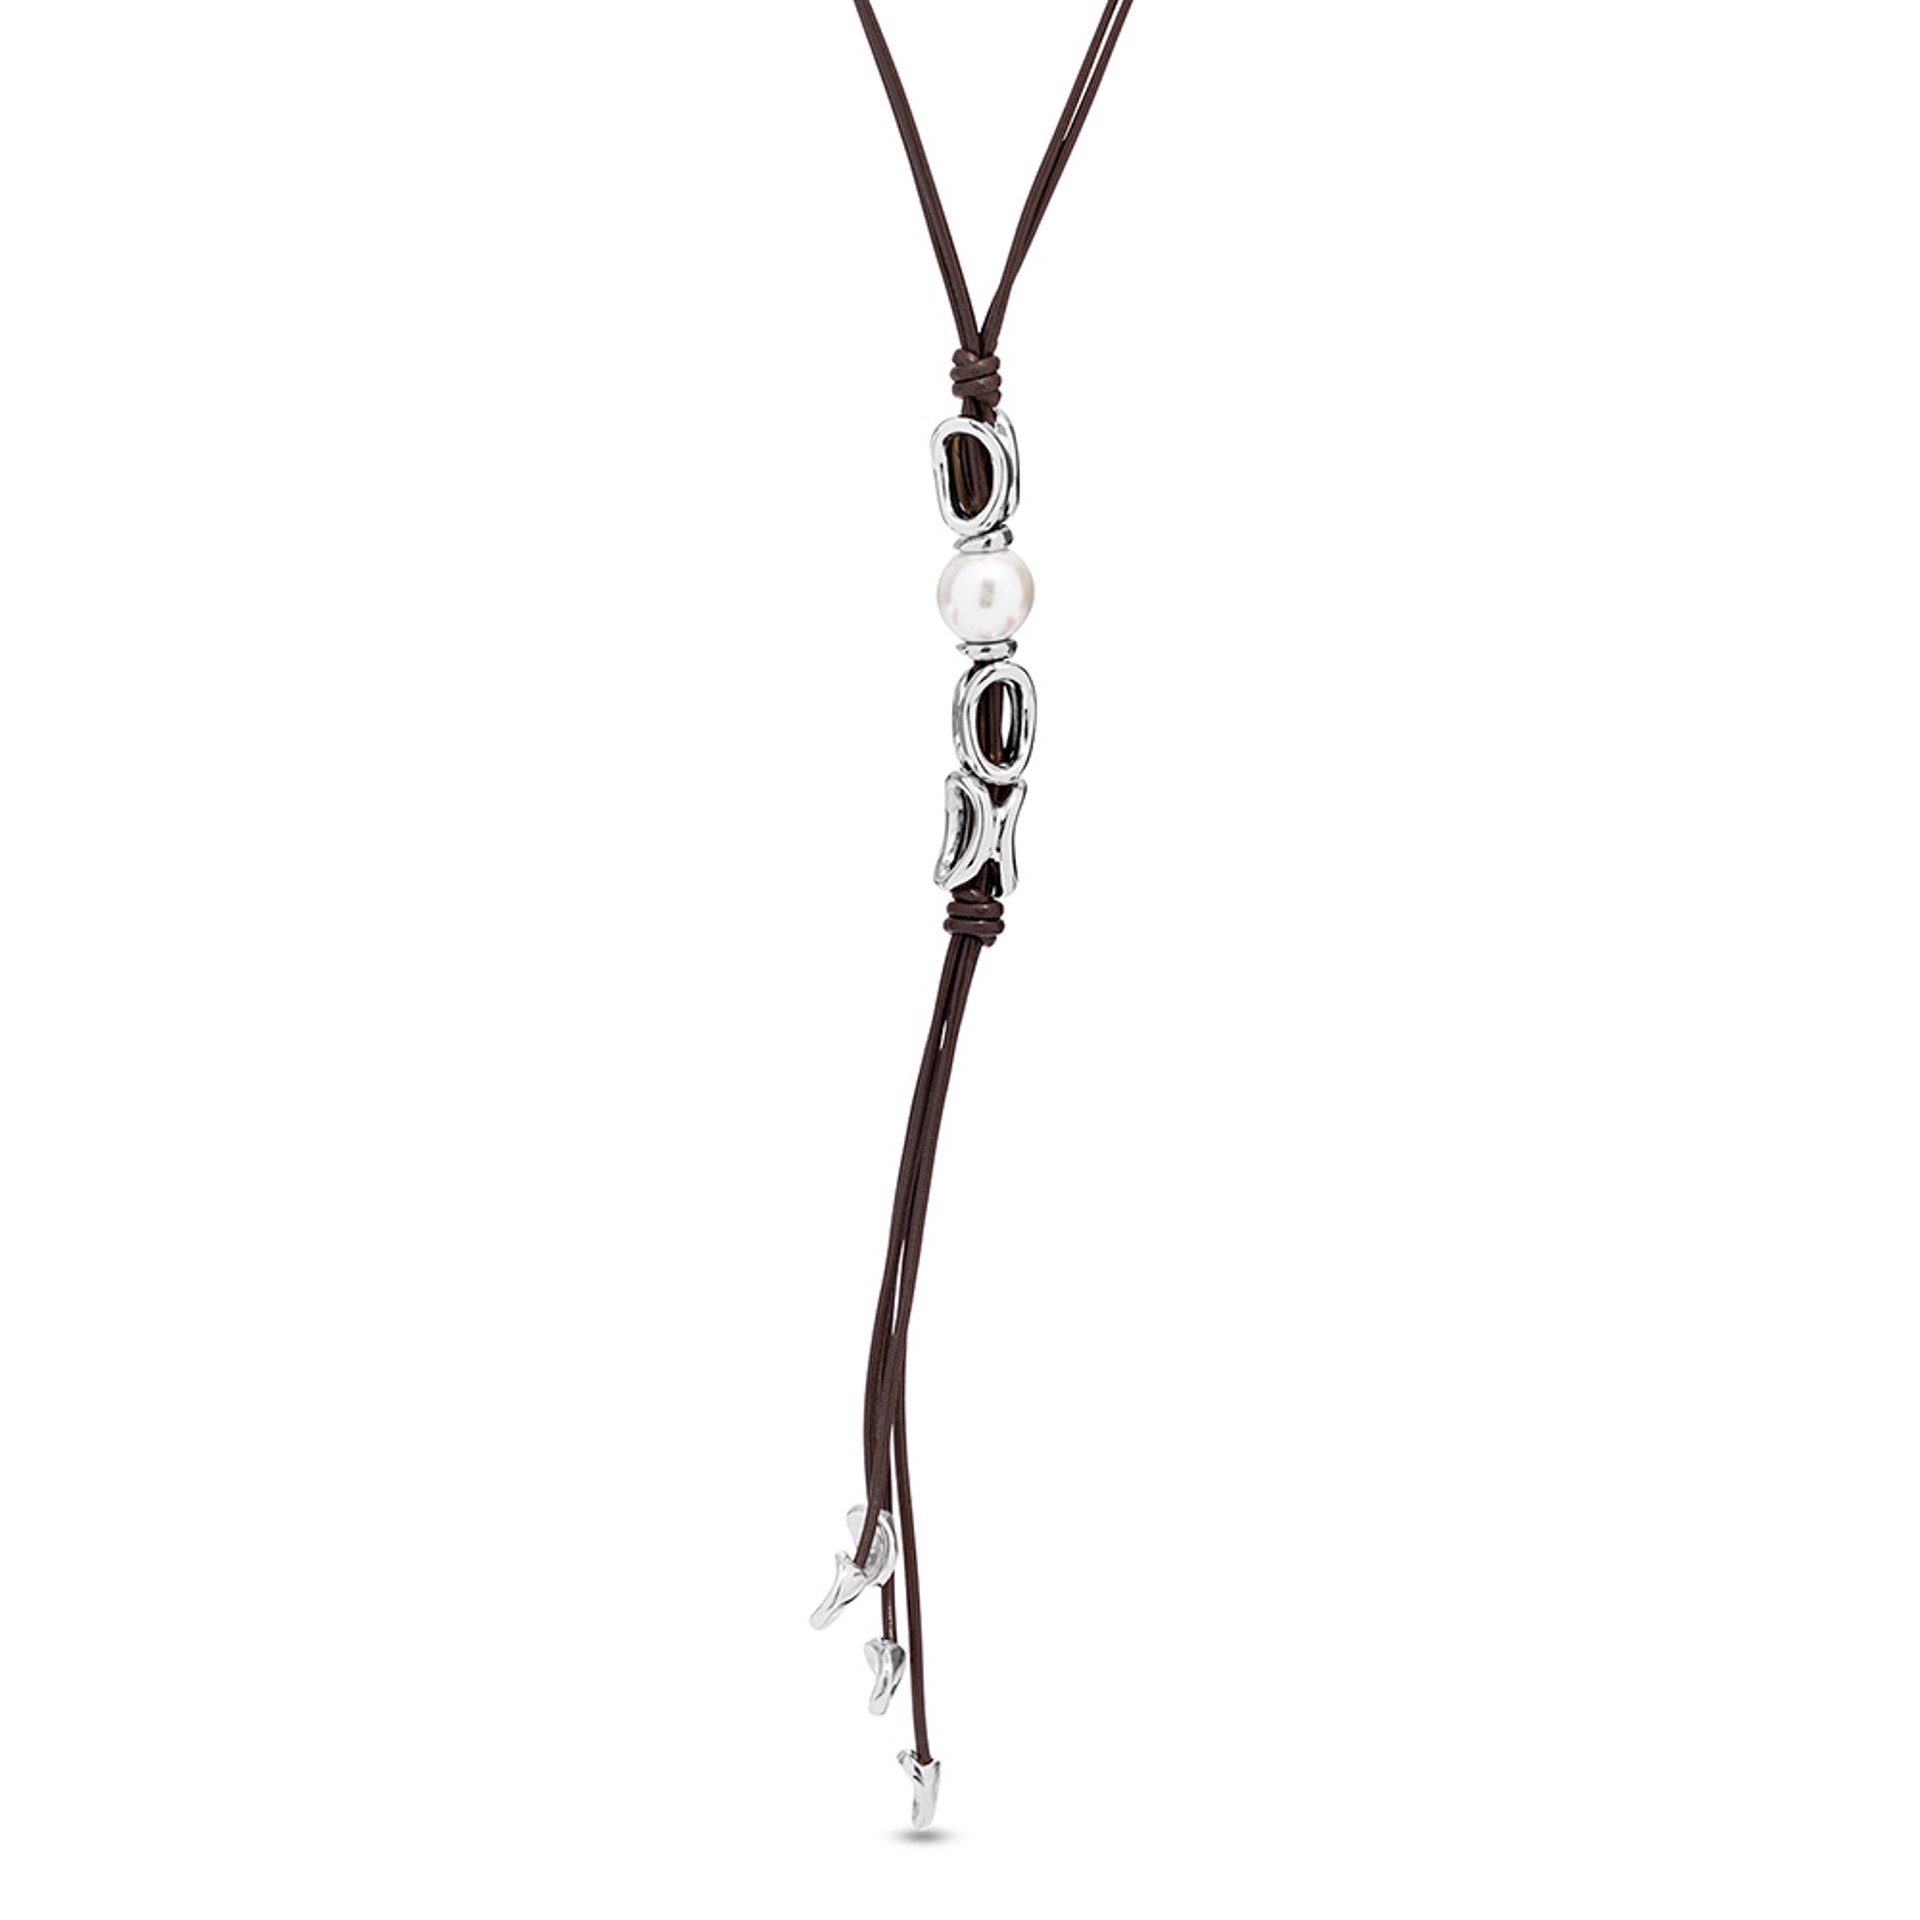 9431 Uno de 50 Leather Necklace with Silver Charms by UNO DE 50